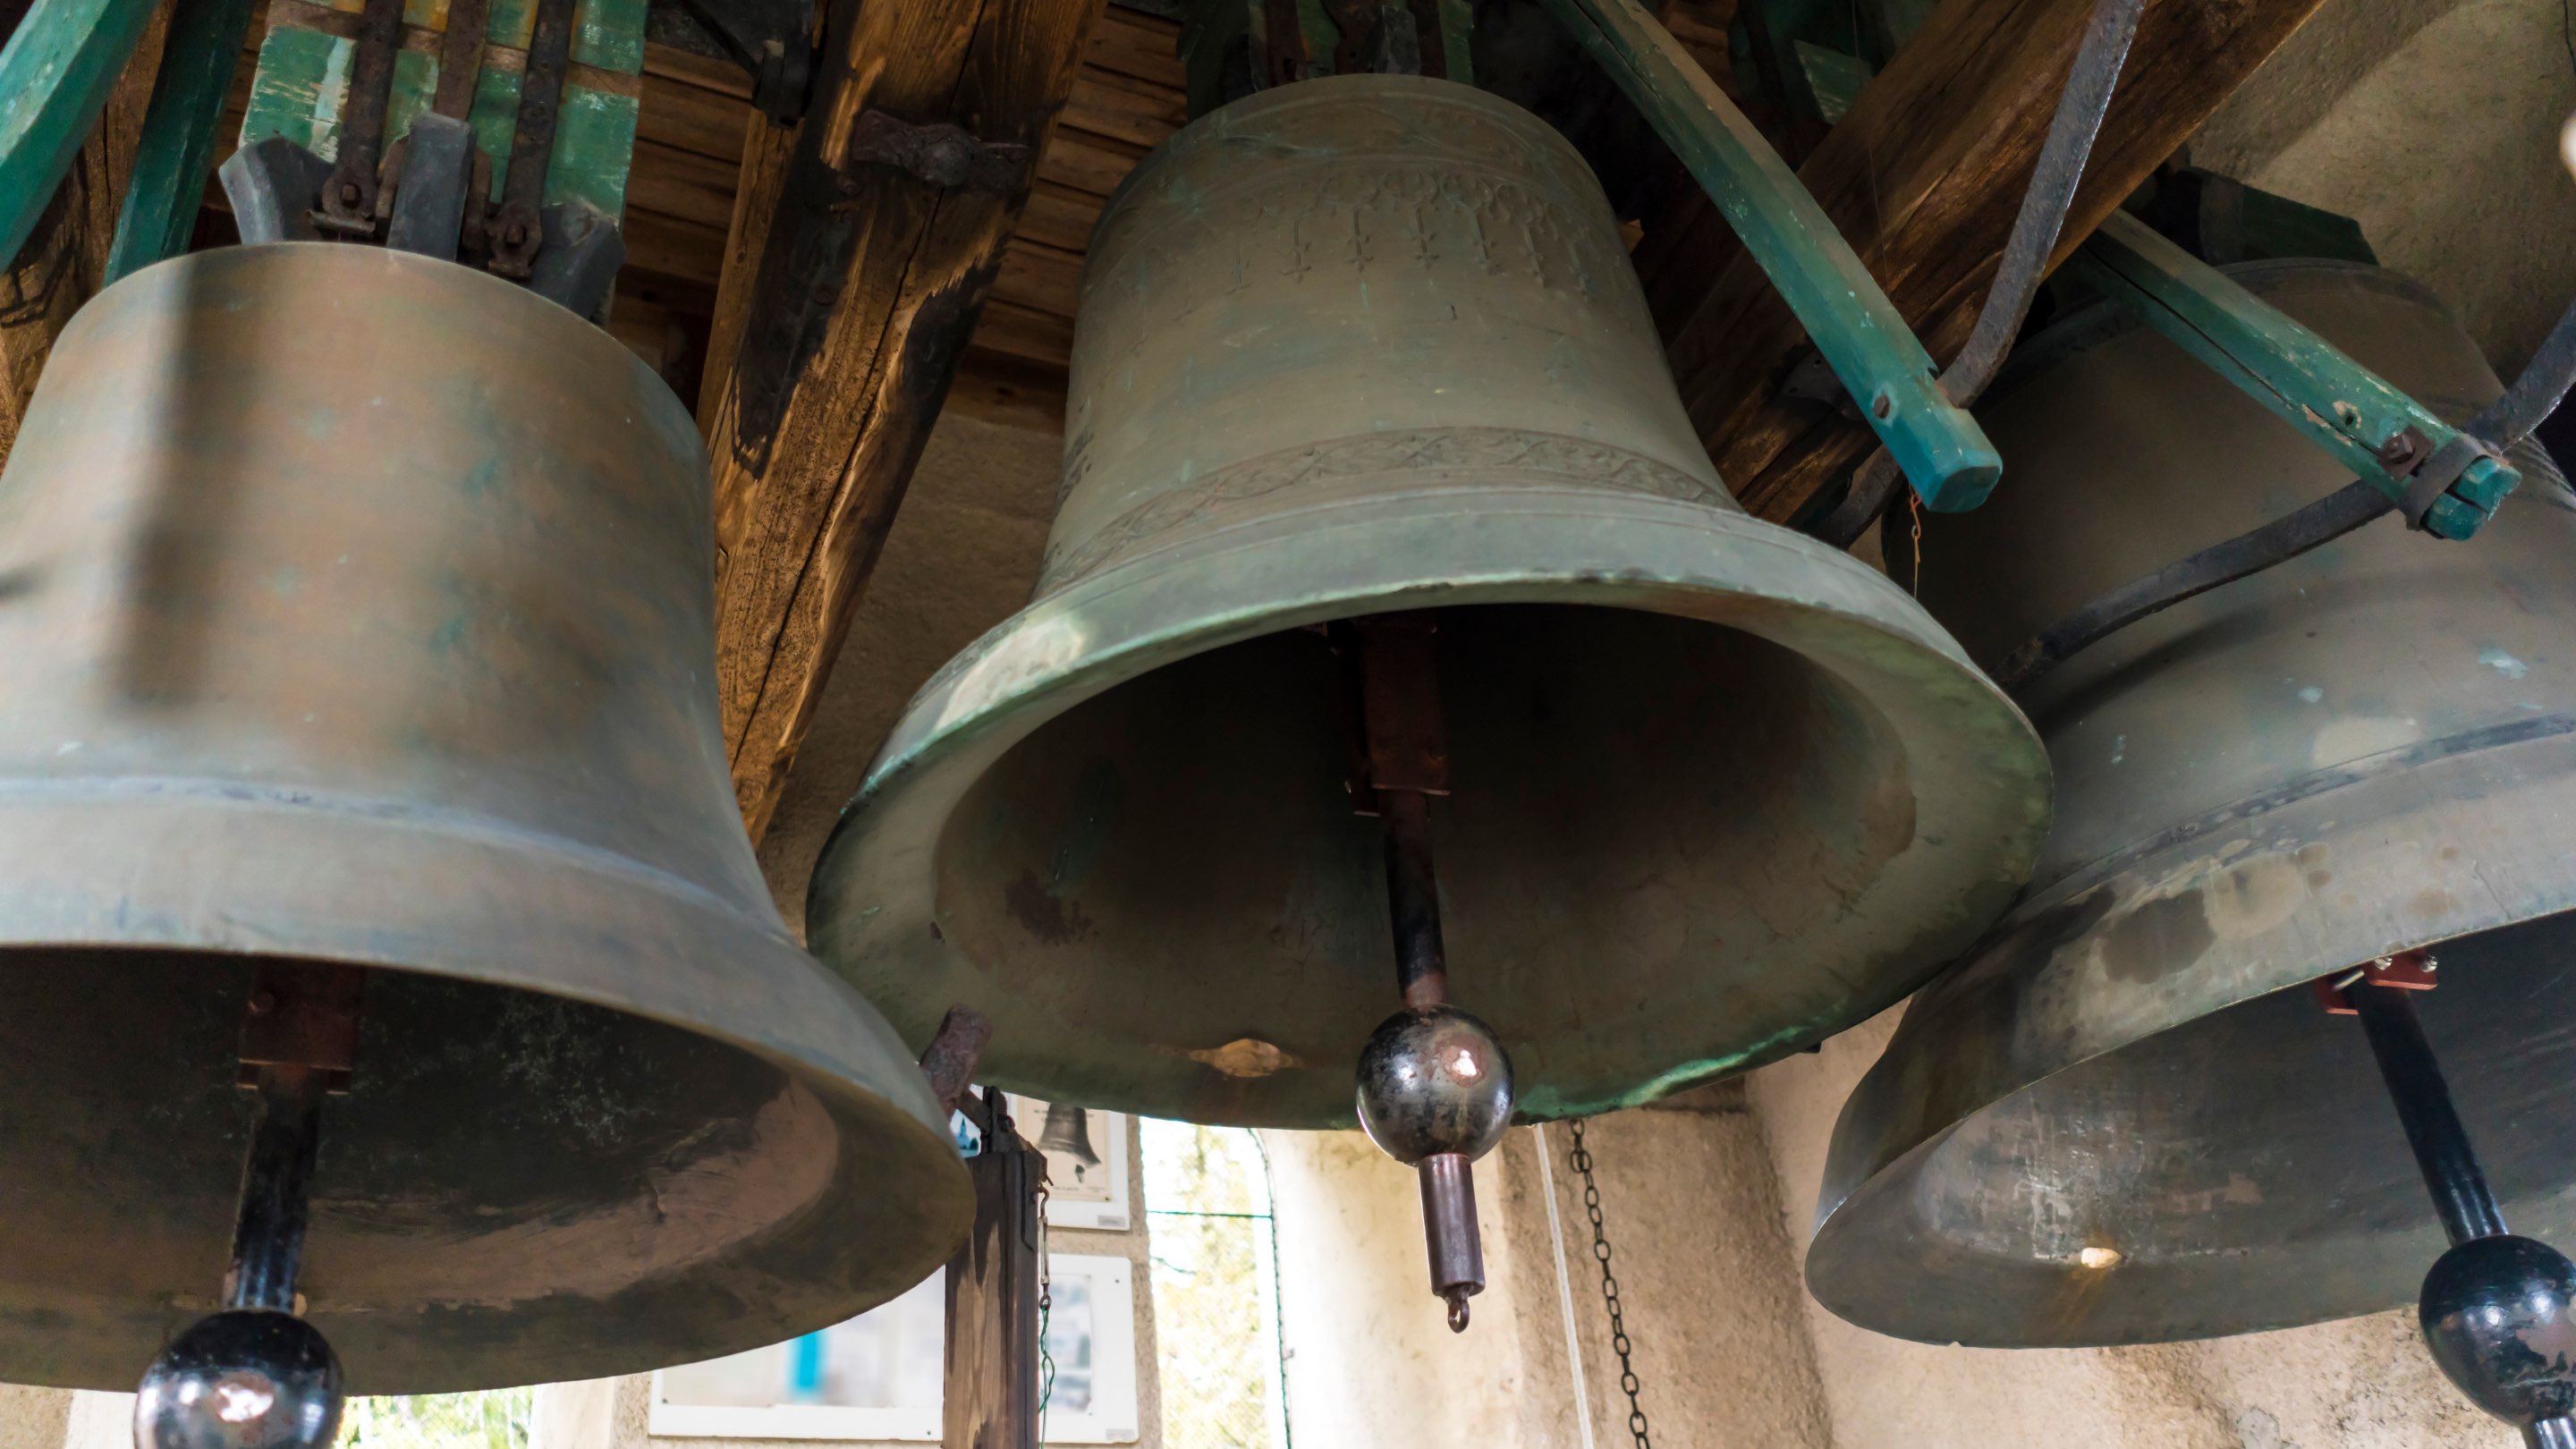 Bell ringing